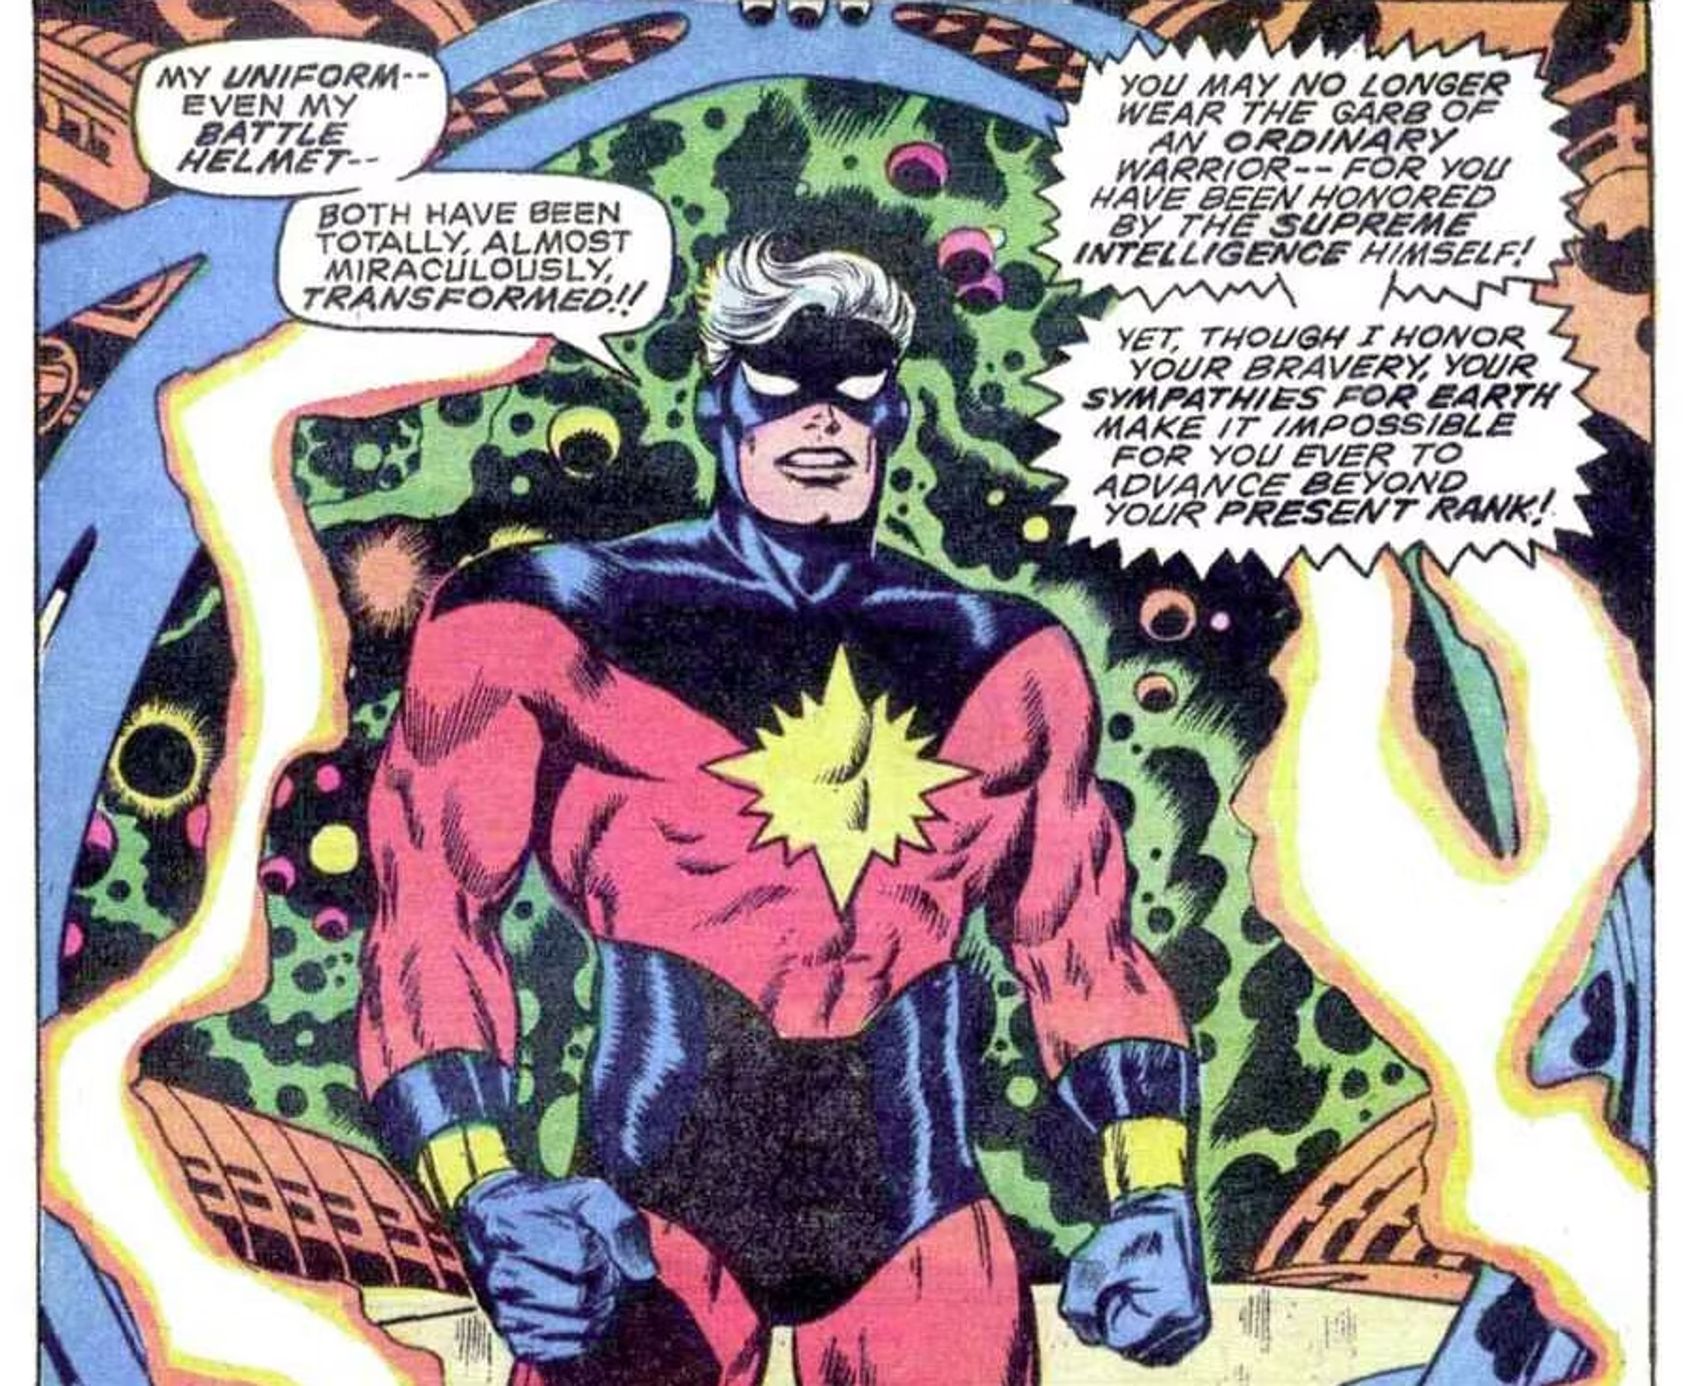 Captain Mar-Vell, original wielder of the Kree Nega-Bands in Marvel Comics